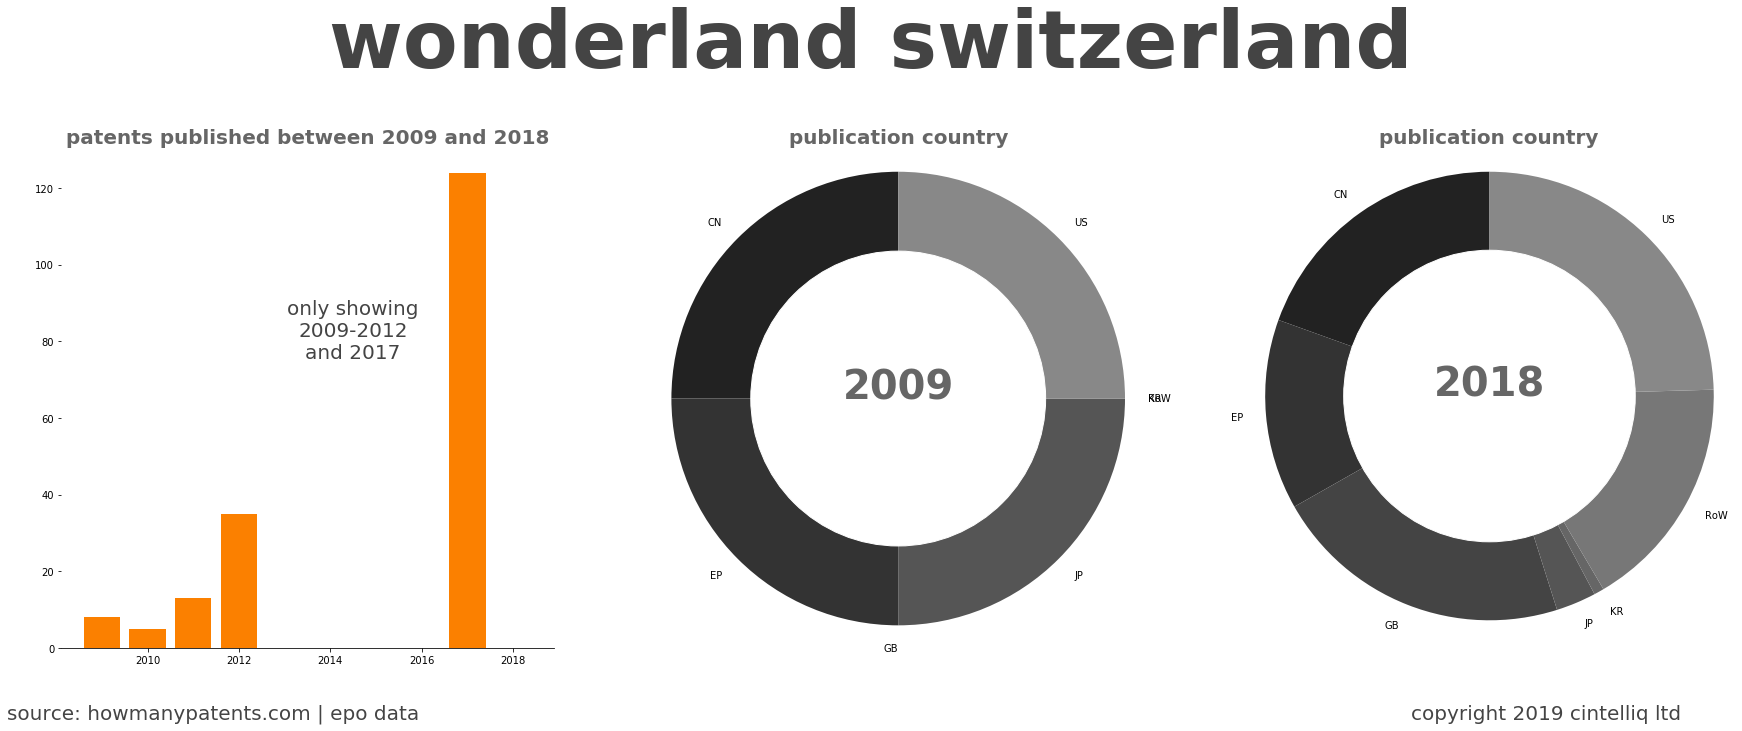 summary of patents for Wonderland Switzerland